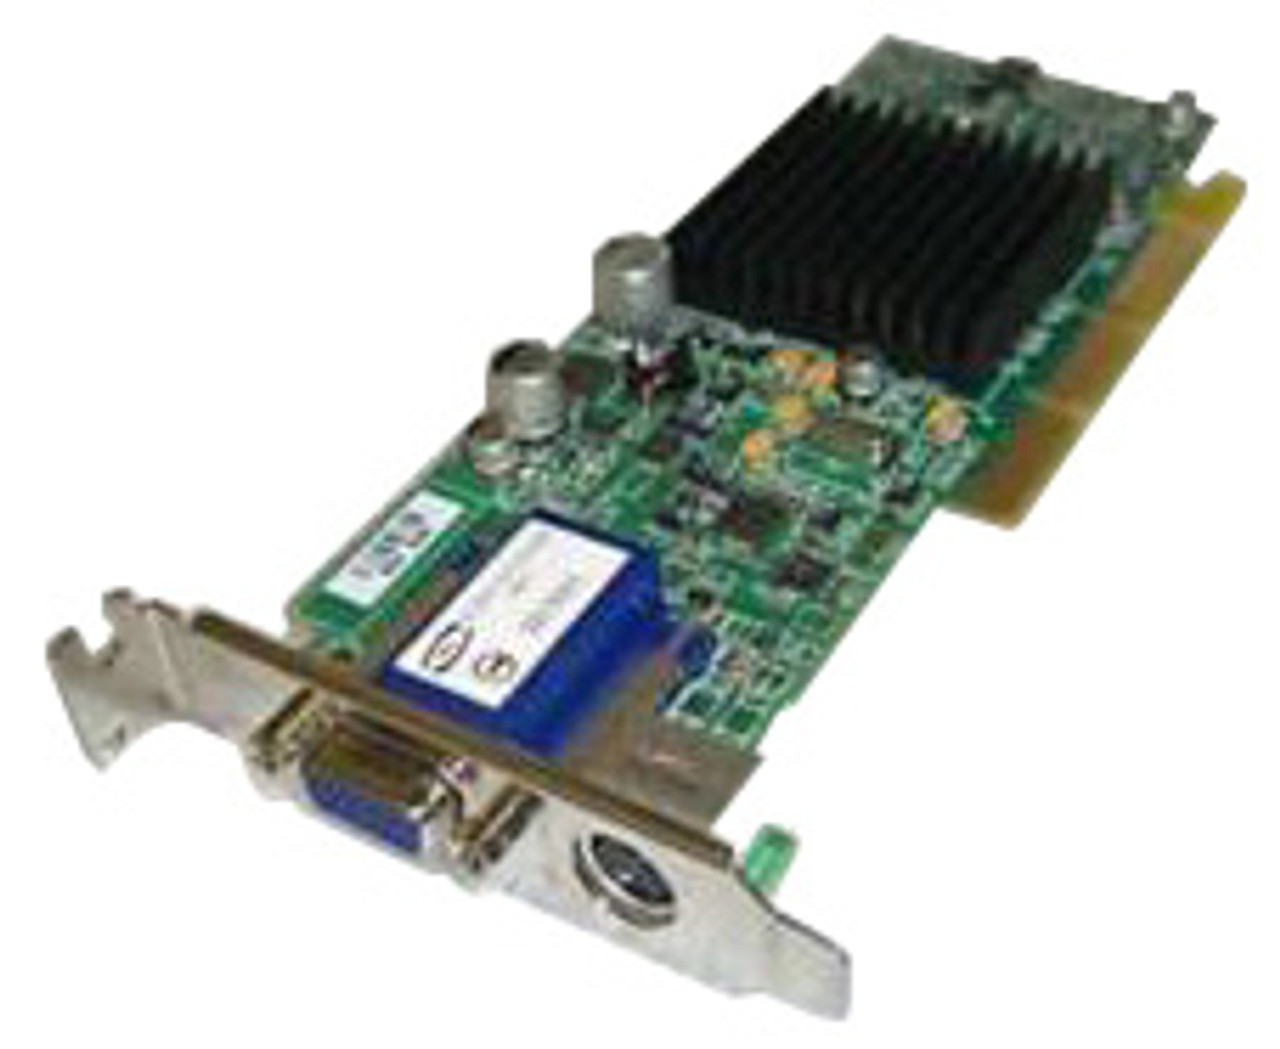 6T975 - Dell ATI Radeon 7500 AGP 32MB Video Card for Dell Optiplex GX260